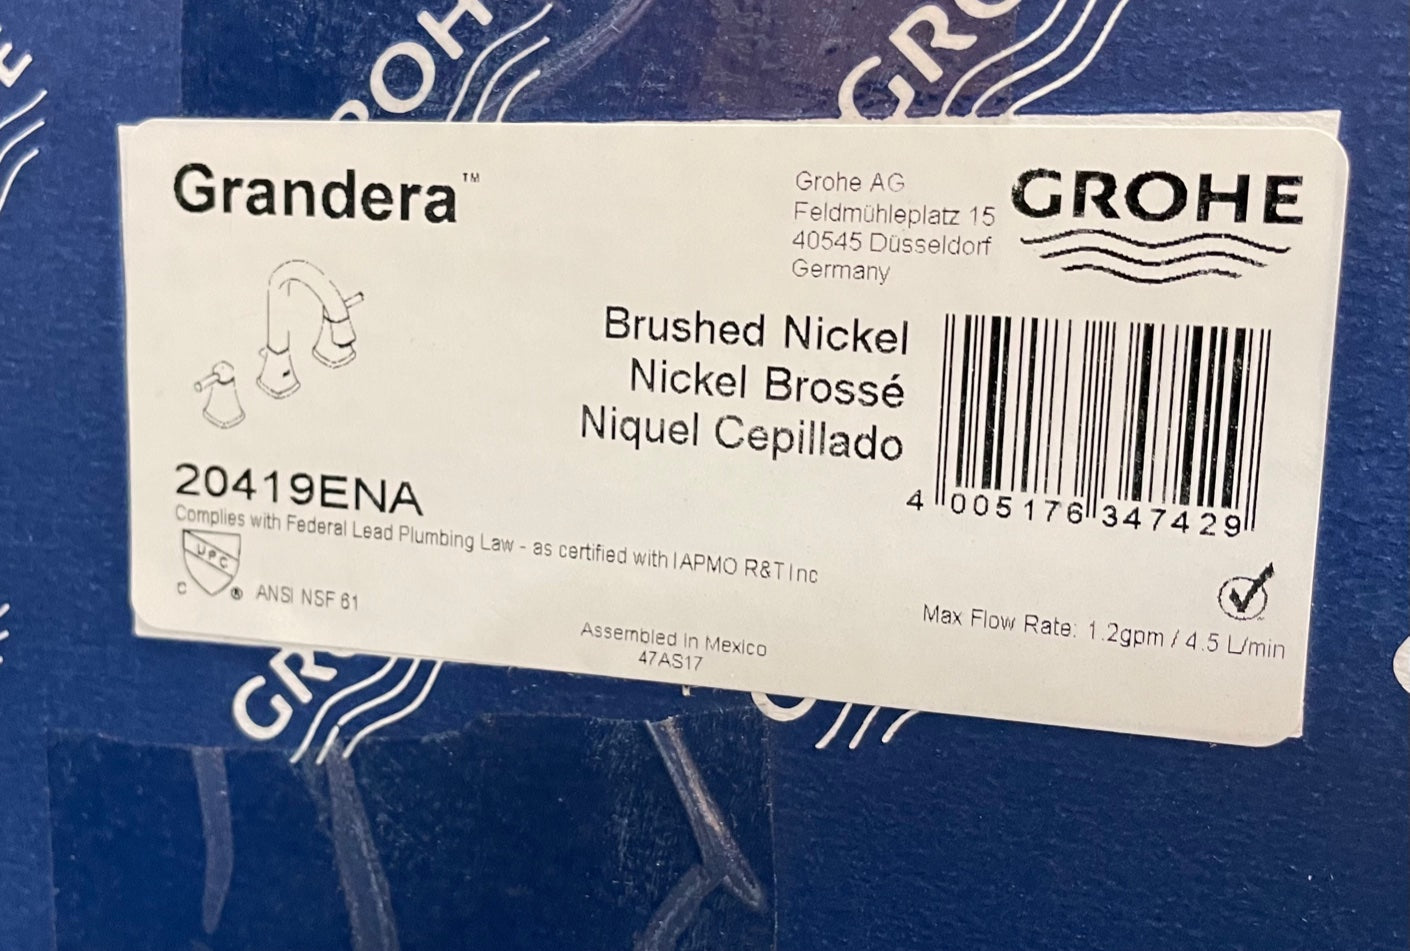 "GRANDERA" 8-inch BRUSHED NICKEL WIDESPREAD 2-HANDLE M-SIZE BATHROOM FAUCET 1.2 GPM